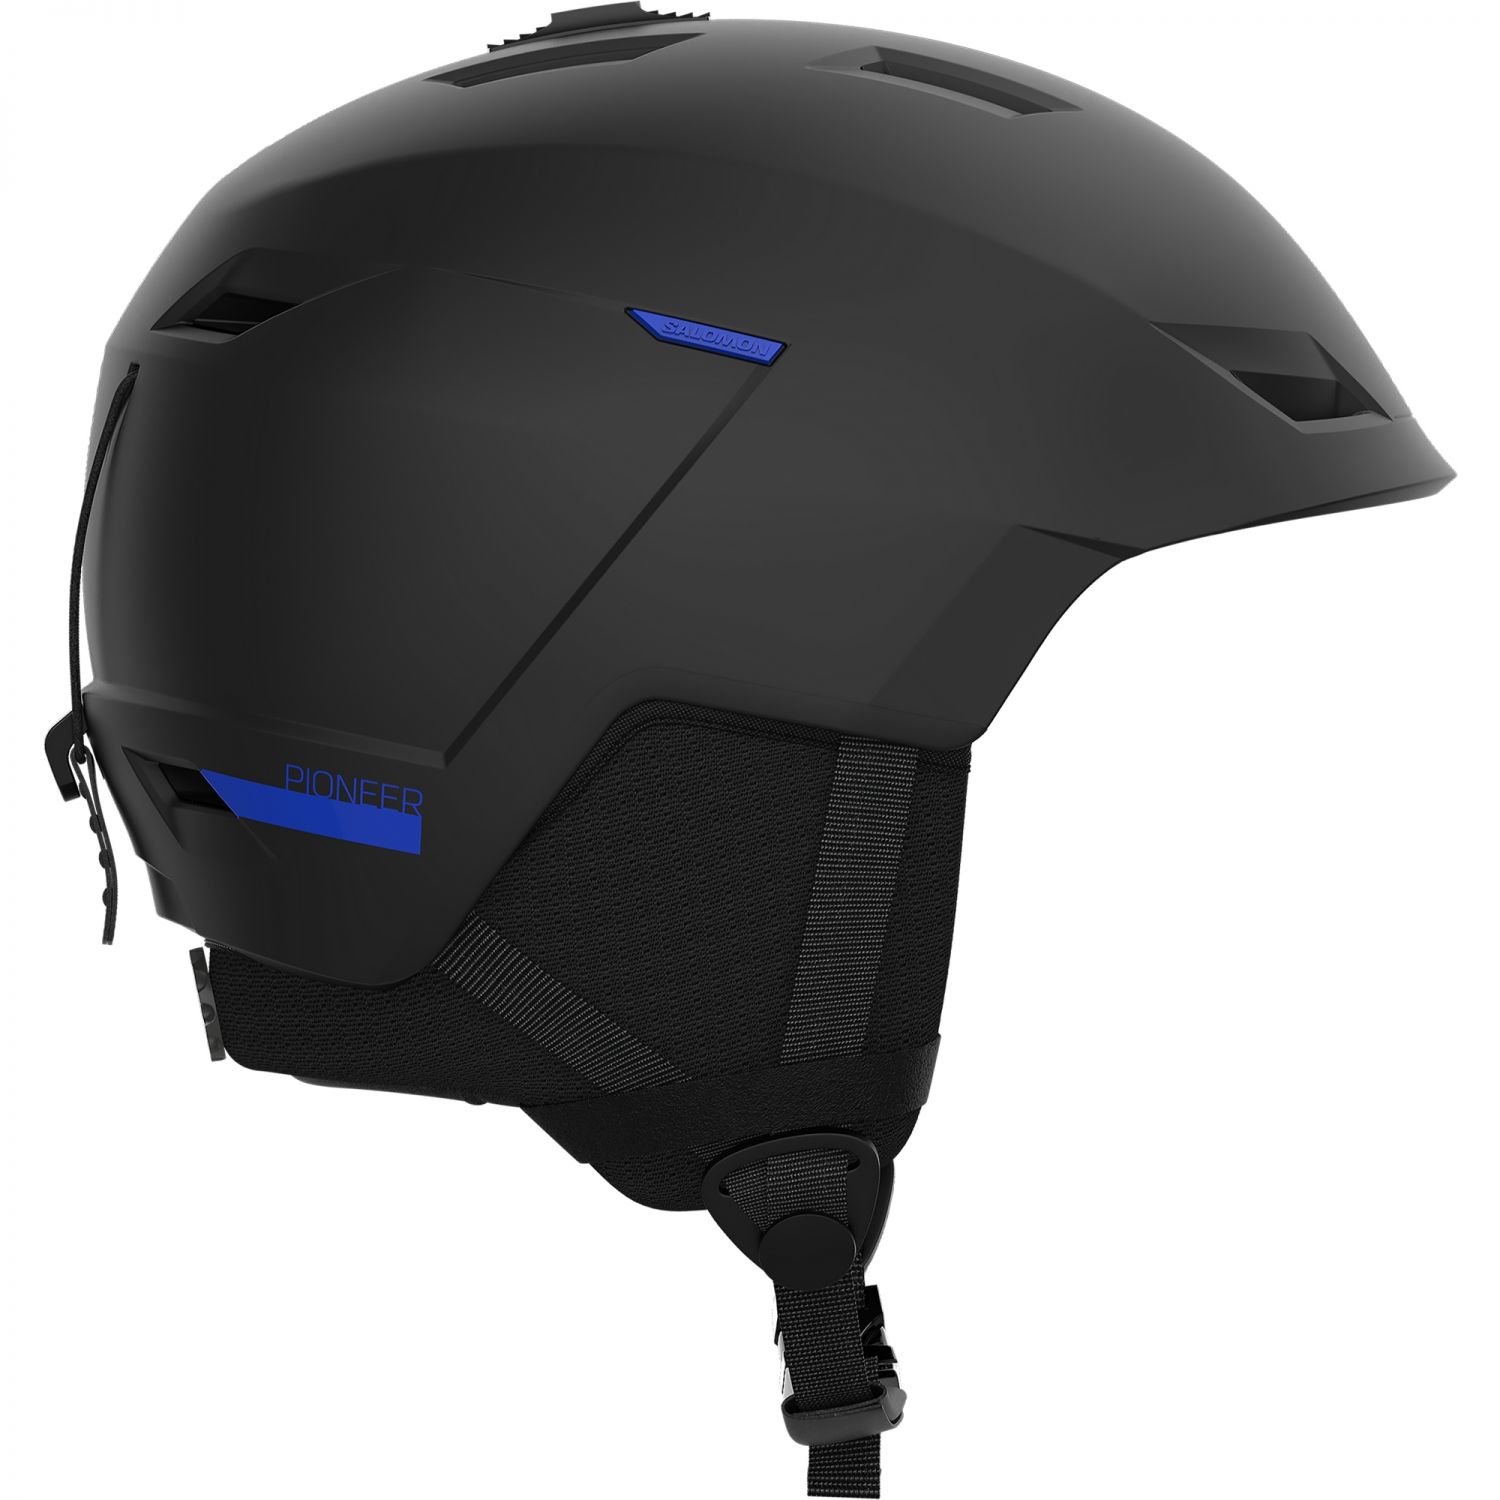 Salomon Pioneer LT, casque de ski, noir/bleu